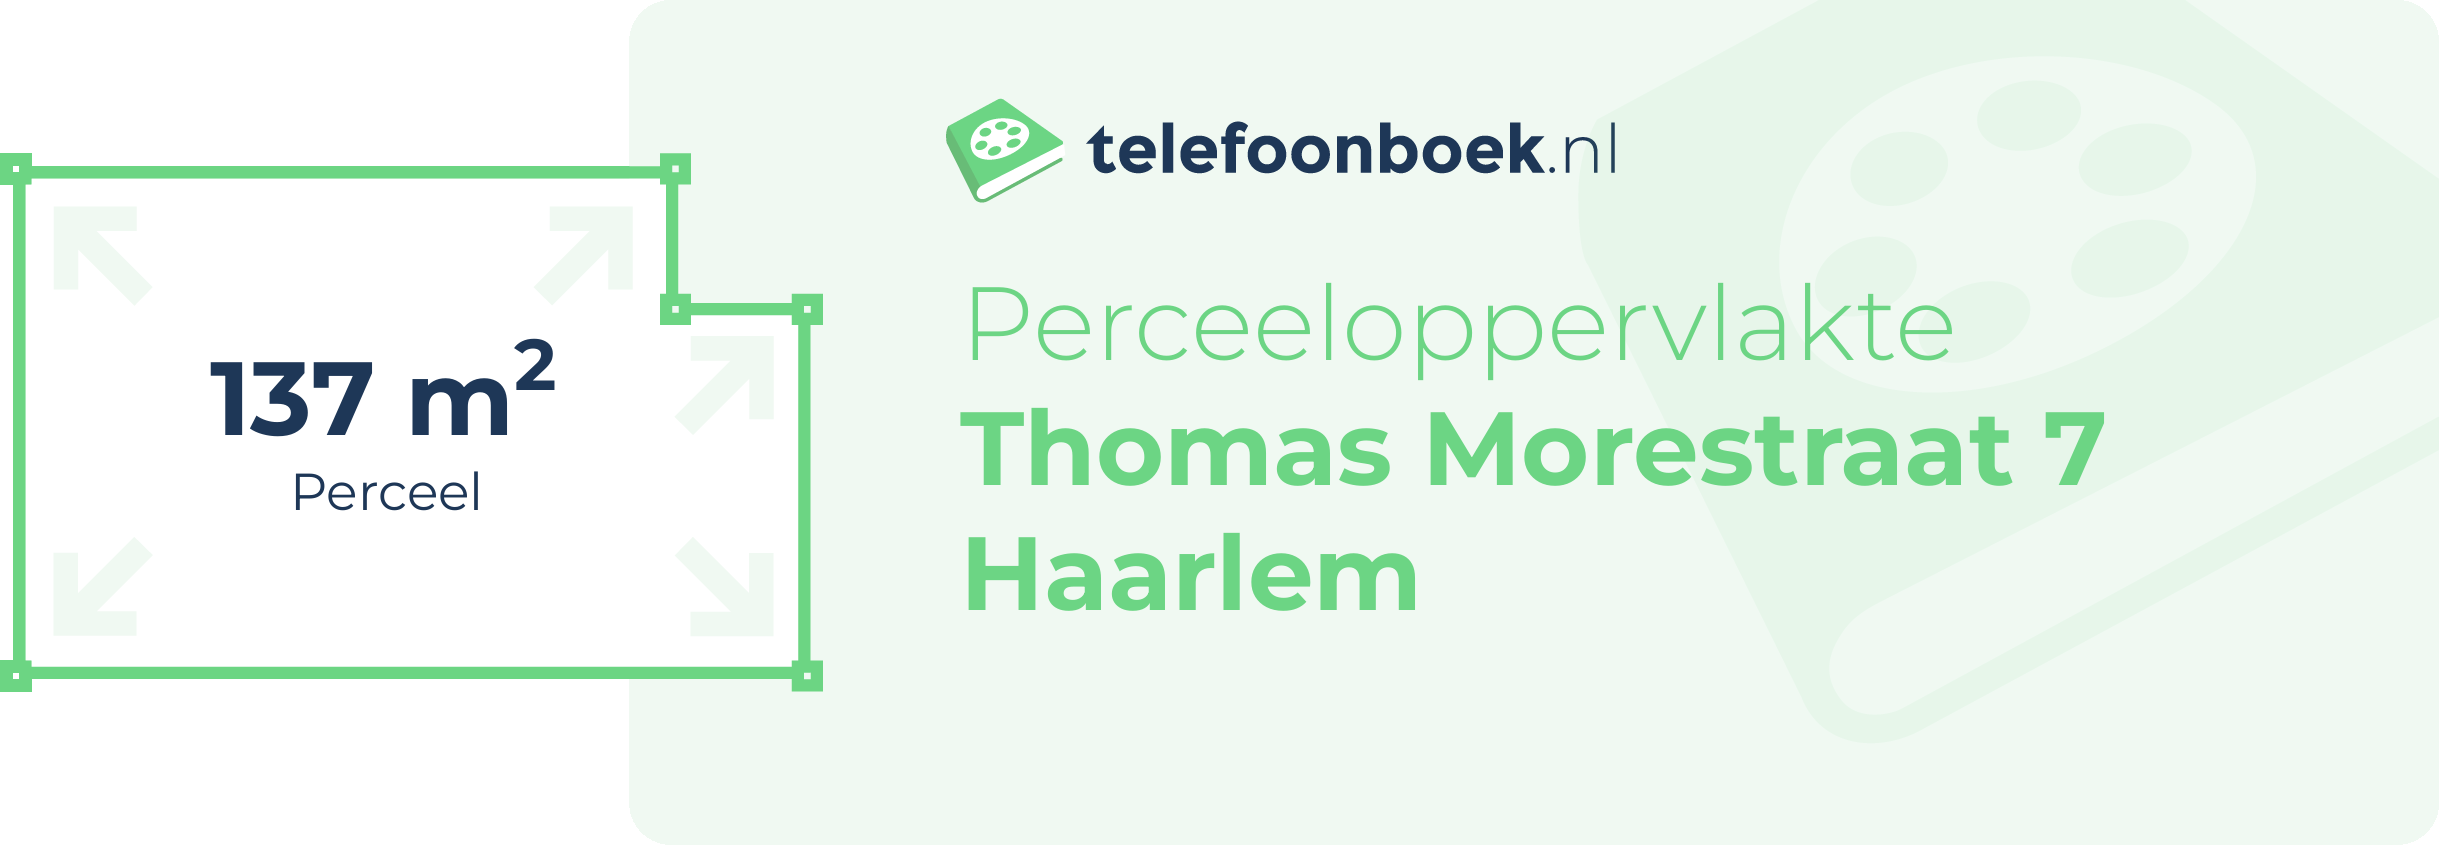 Perceeloppervlakte Thomas Morestraat 7 Haarlem